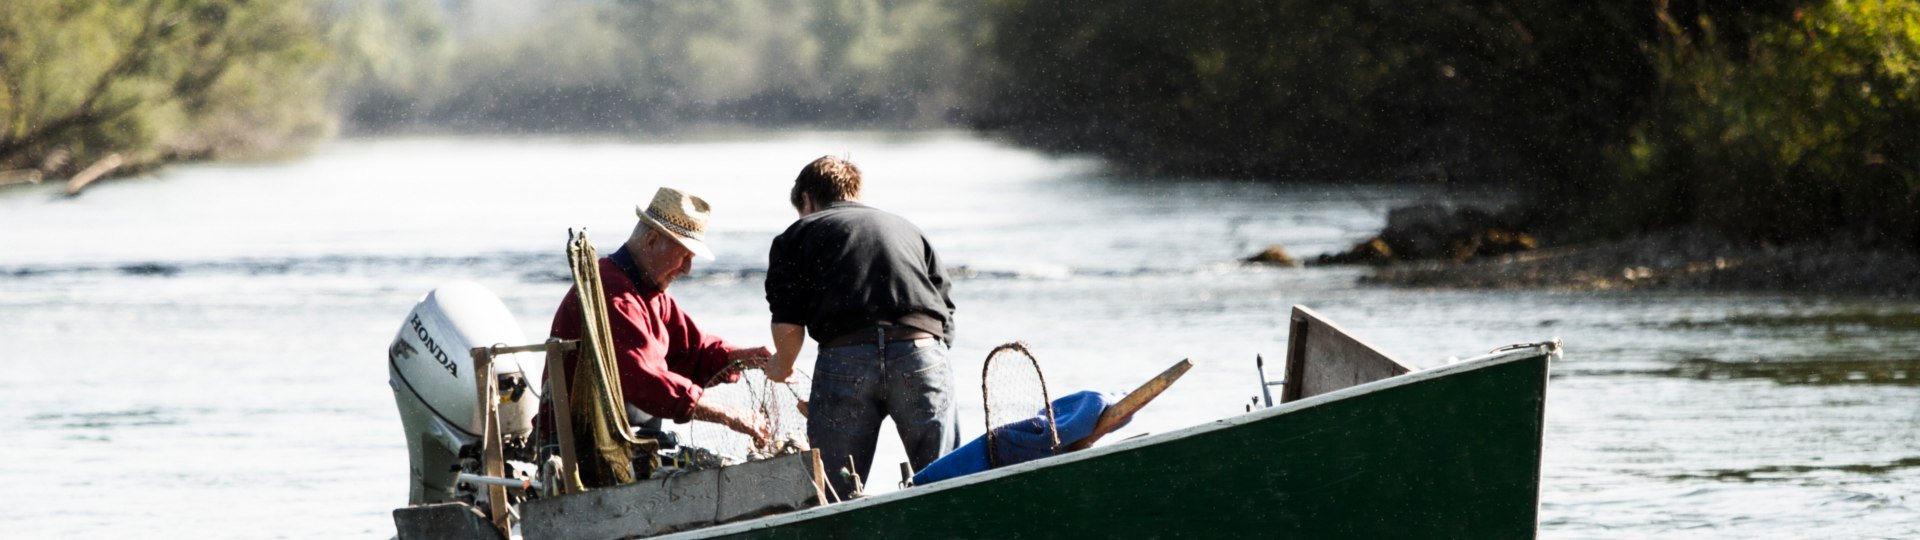 Angler im Boot auf der Loisach bei Kochel a. See, © Tourist information Kochel a. See, Fotograf Thomas Kujat